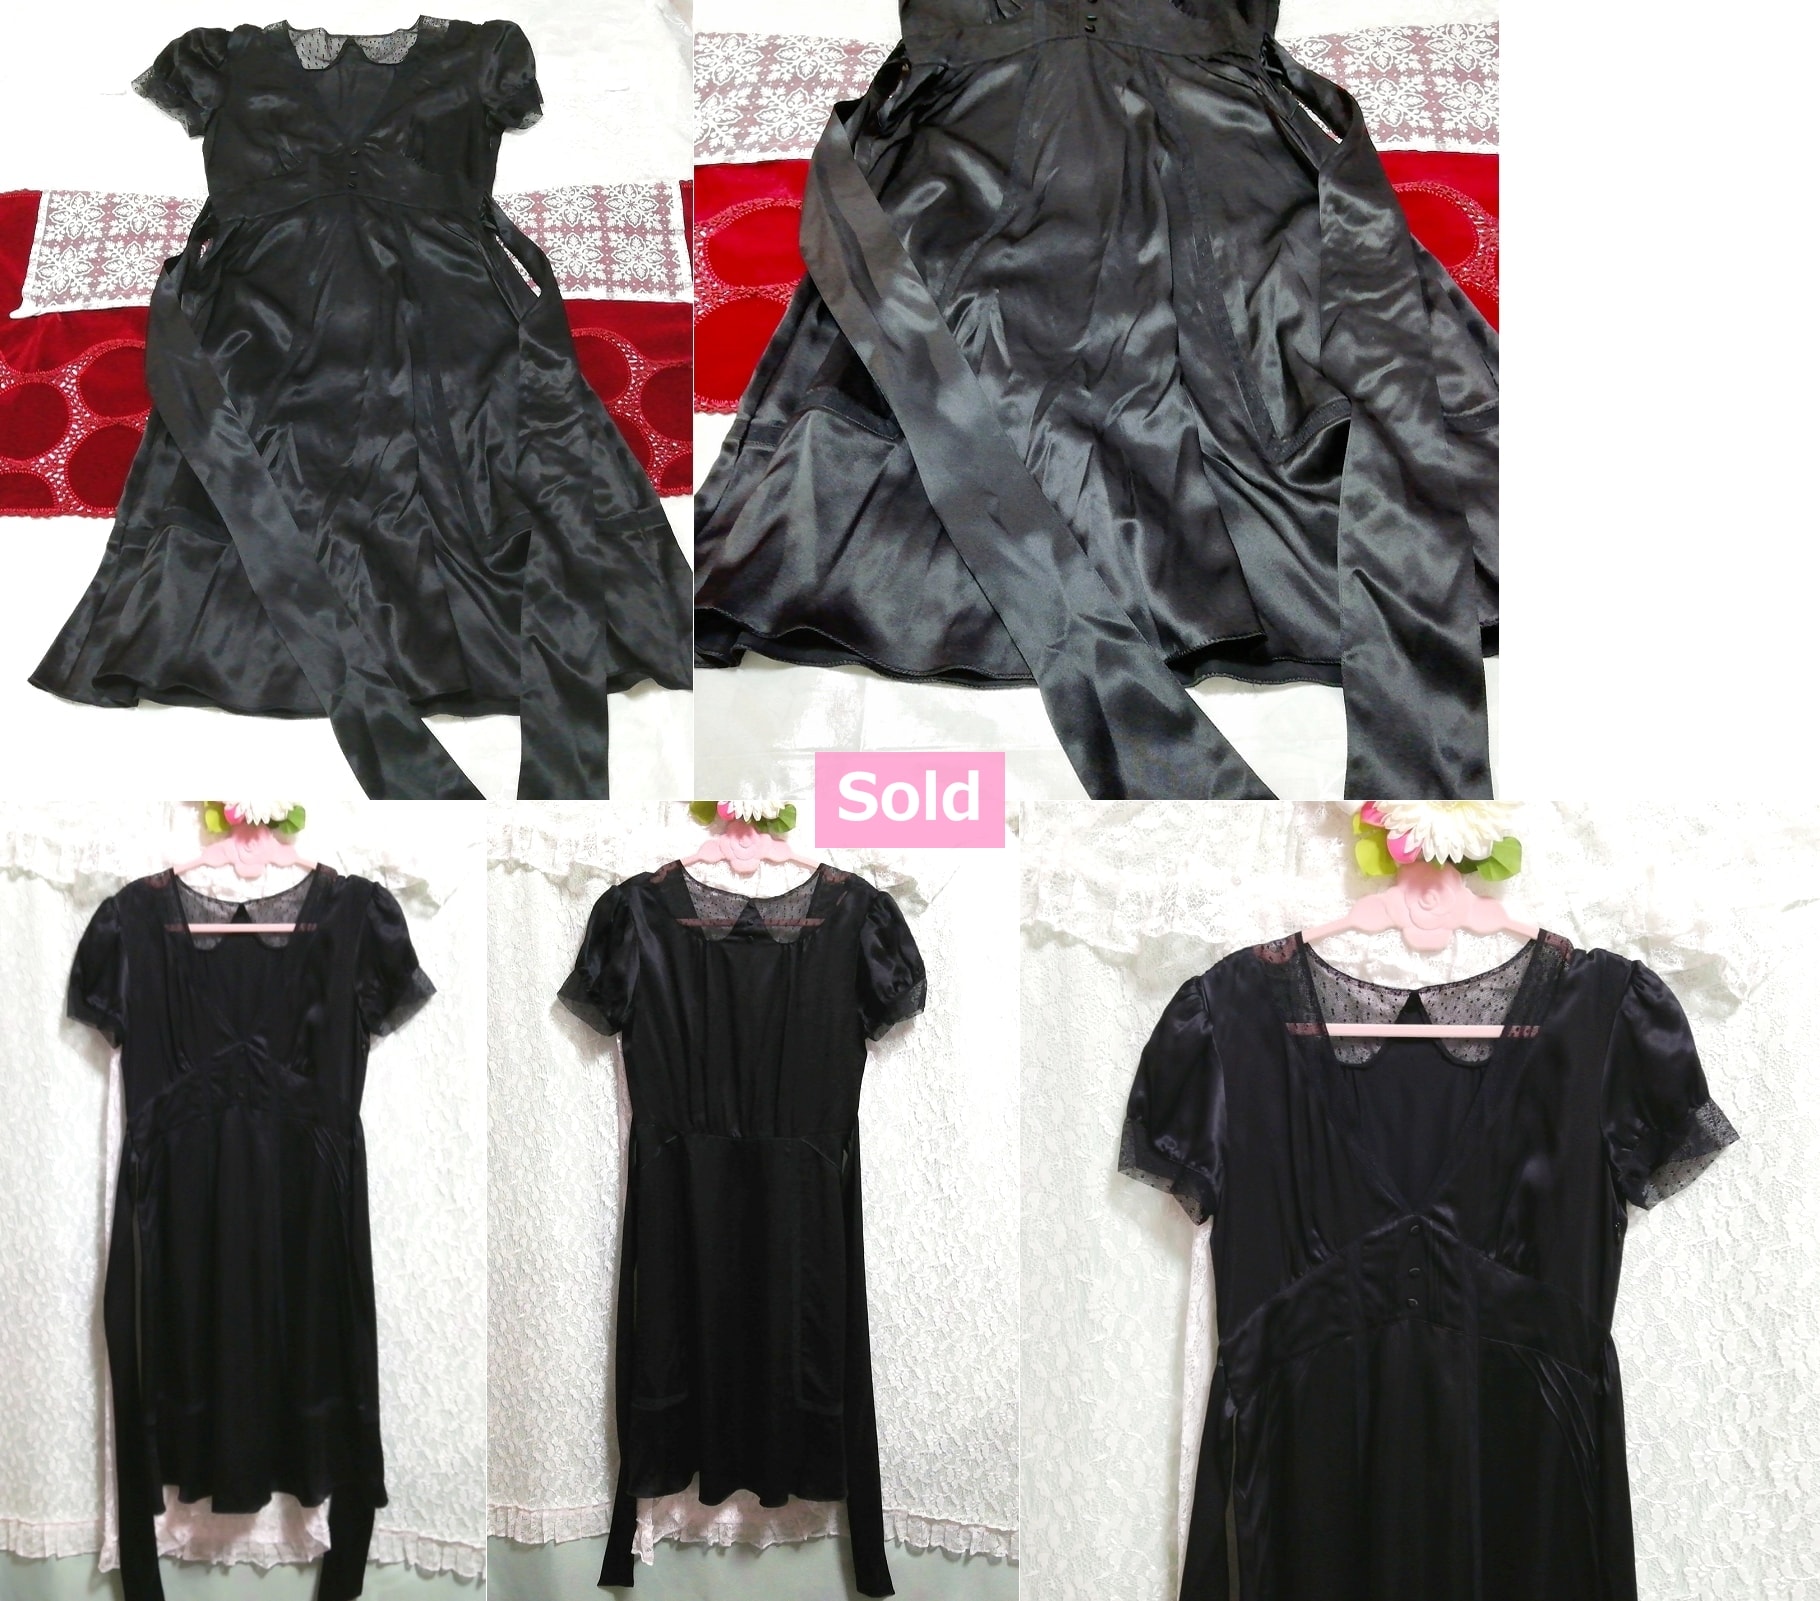 Black satin silk negligee nightgown nightwear short sleeve dress, fashion, ladies' fashion, nightwear, pajamas